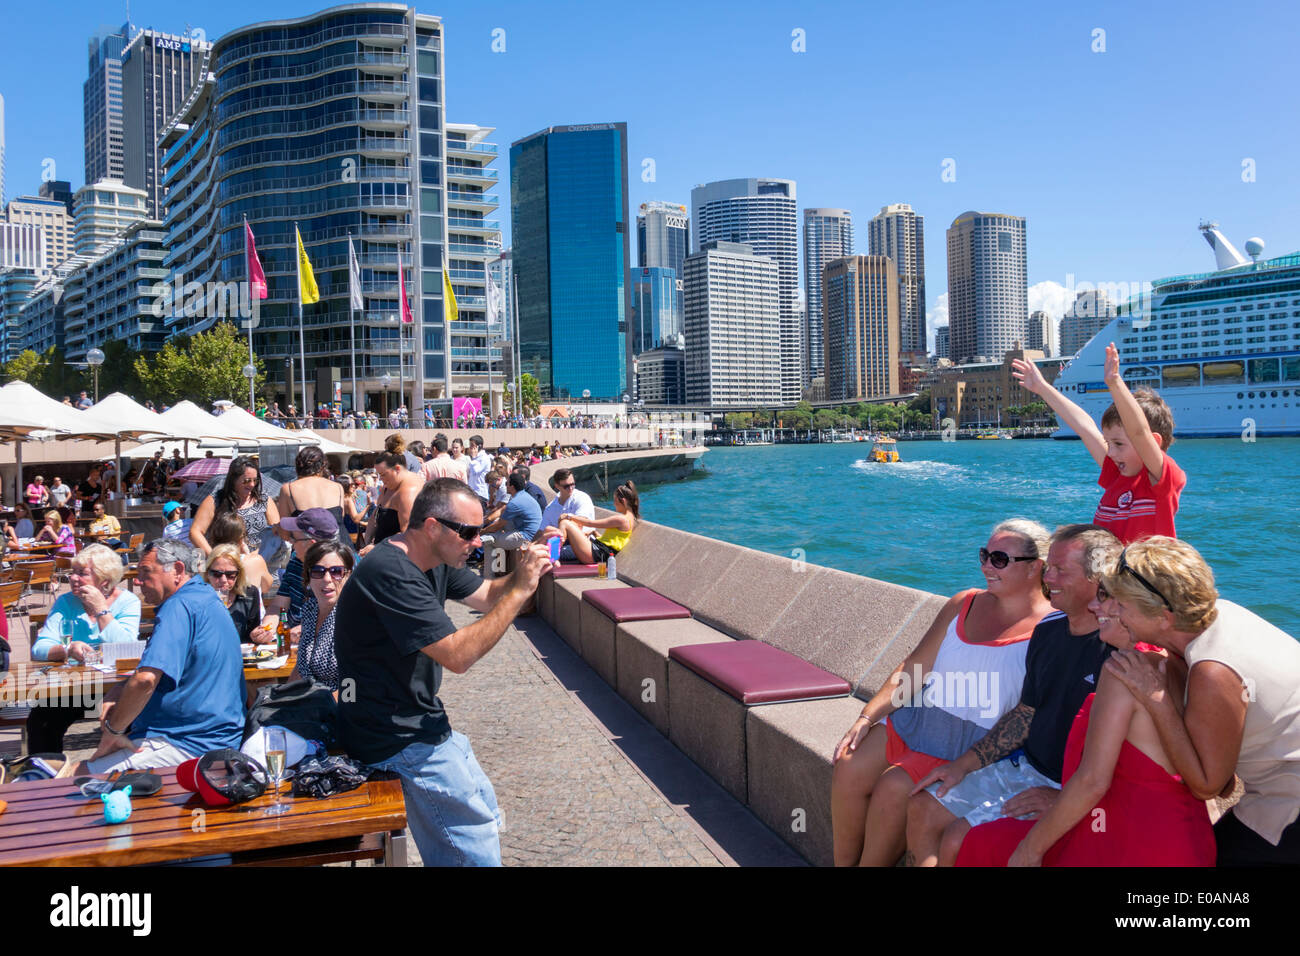 Sydney Australia,Sydney Harbour,harbor,East Circular Quay,city skyline,skyscrapers,promenade,Opera Bar,restaurant restaurants food dining cafe cafes,a Stock Photo